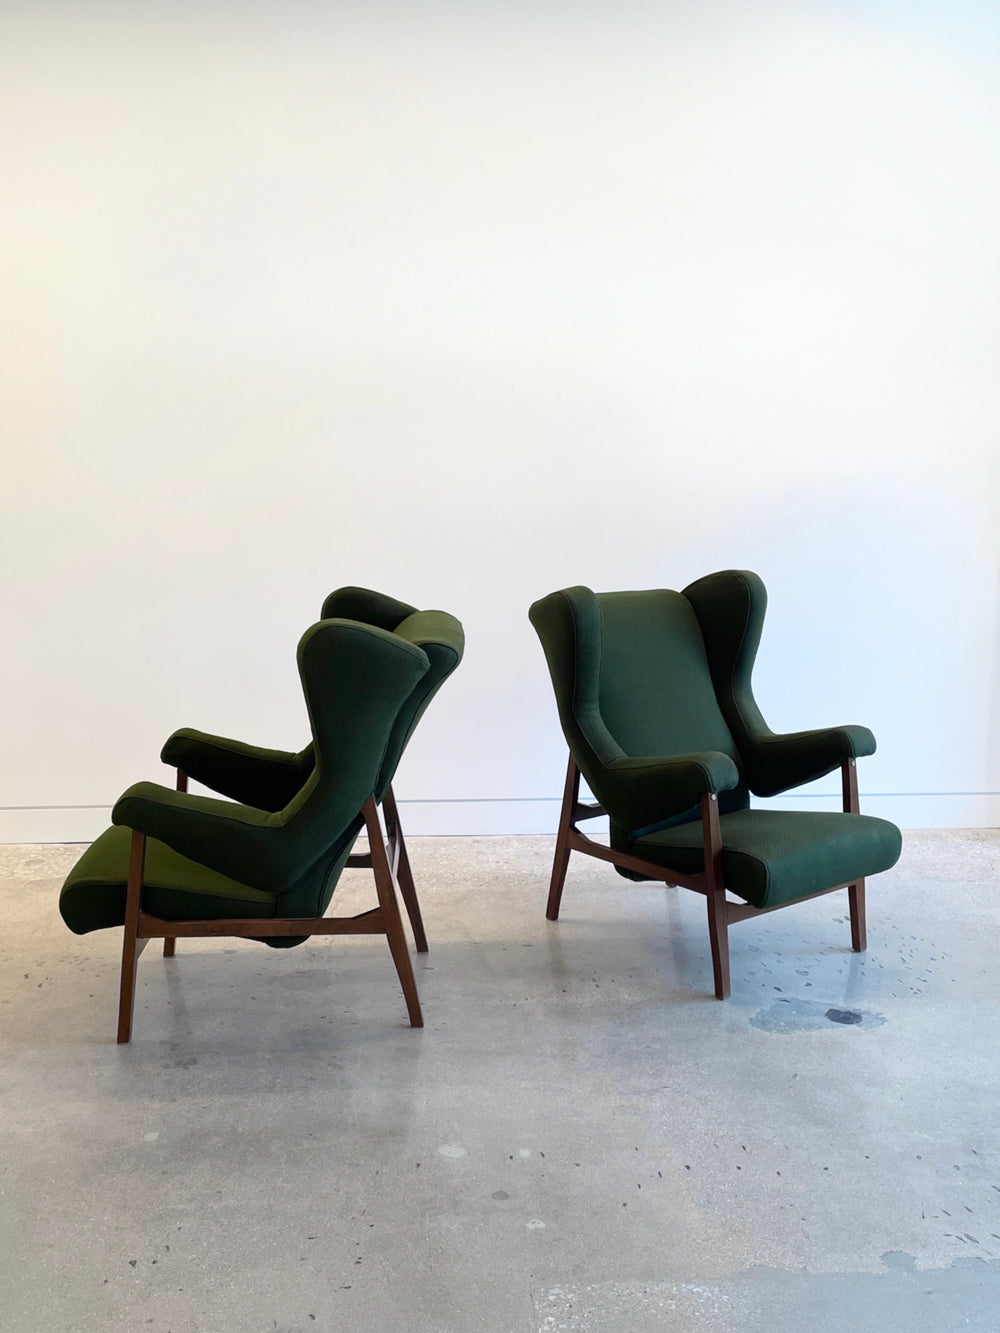 Franco Albini rare pair of model "Fiorenza" lounge chairs for Arflex, Italy, 1953